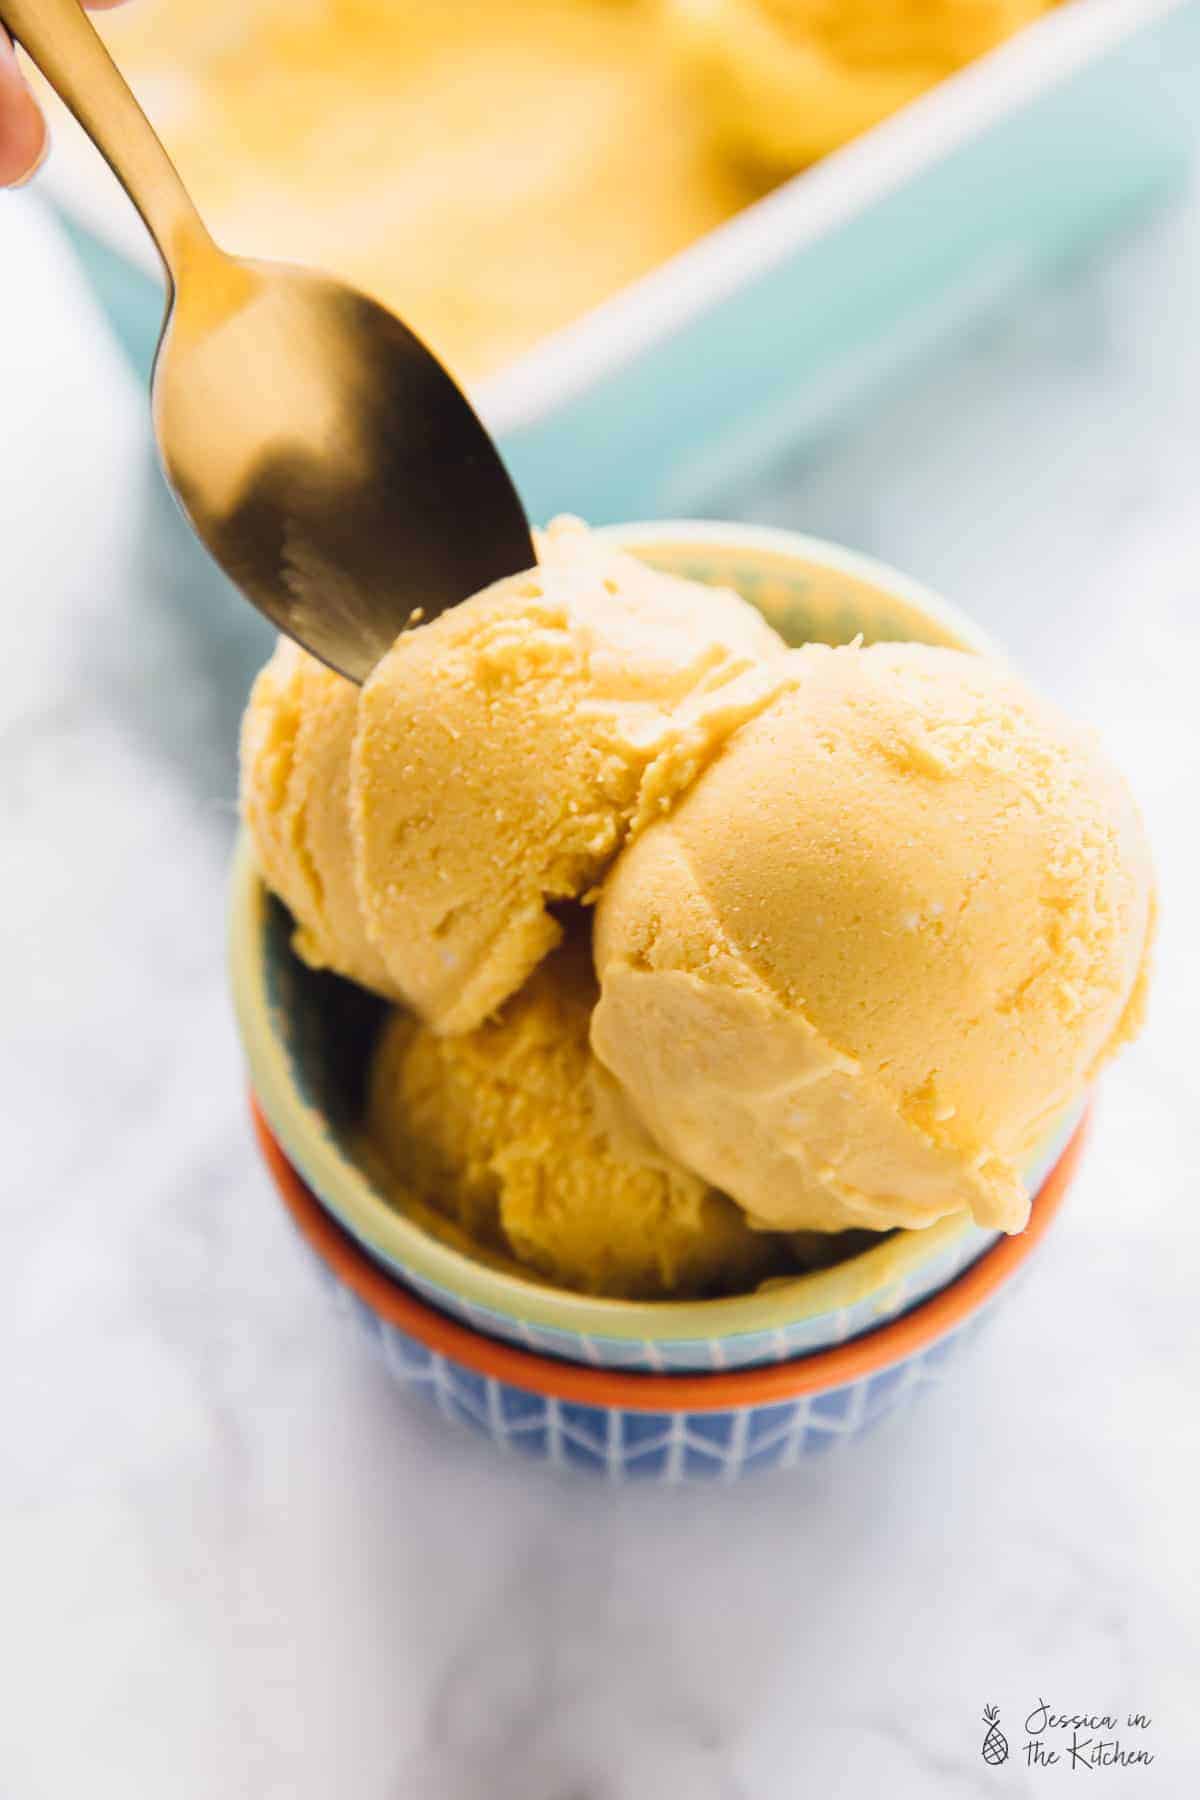 A gold spoon digging into some vegan mango ice cream.